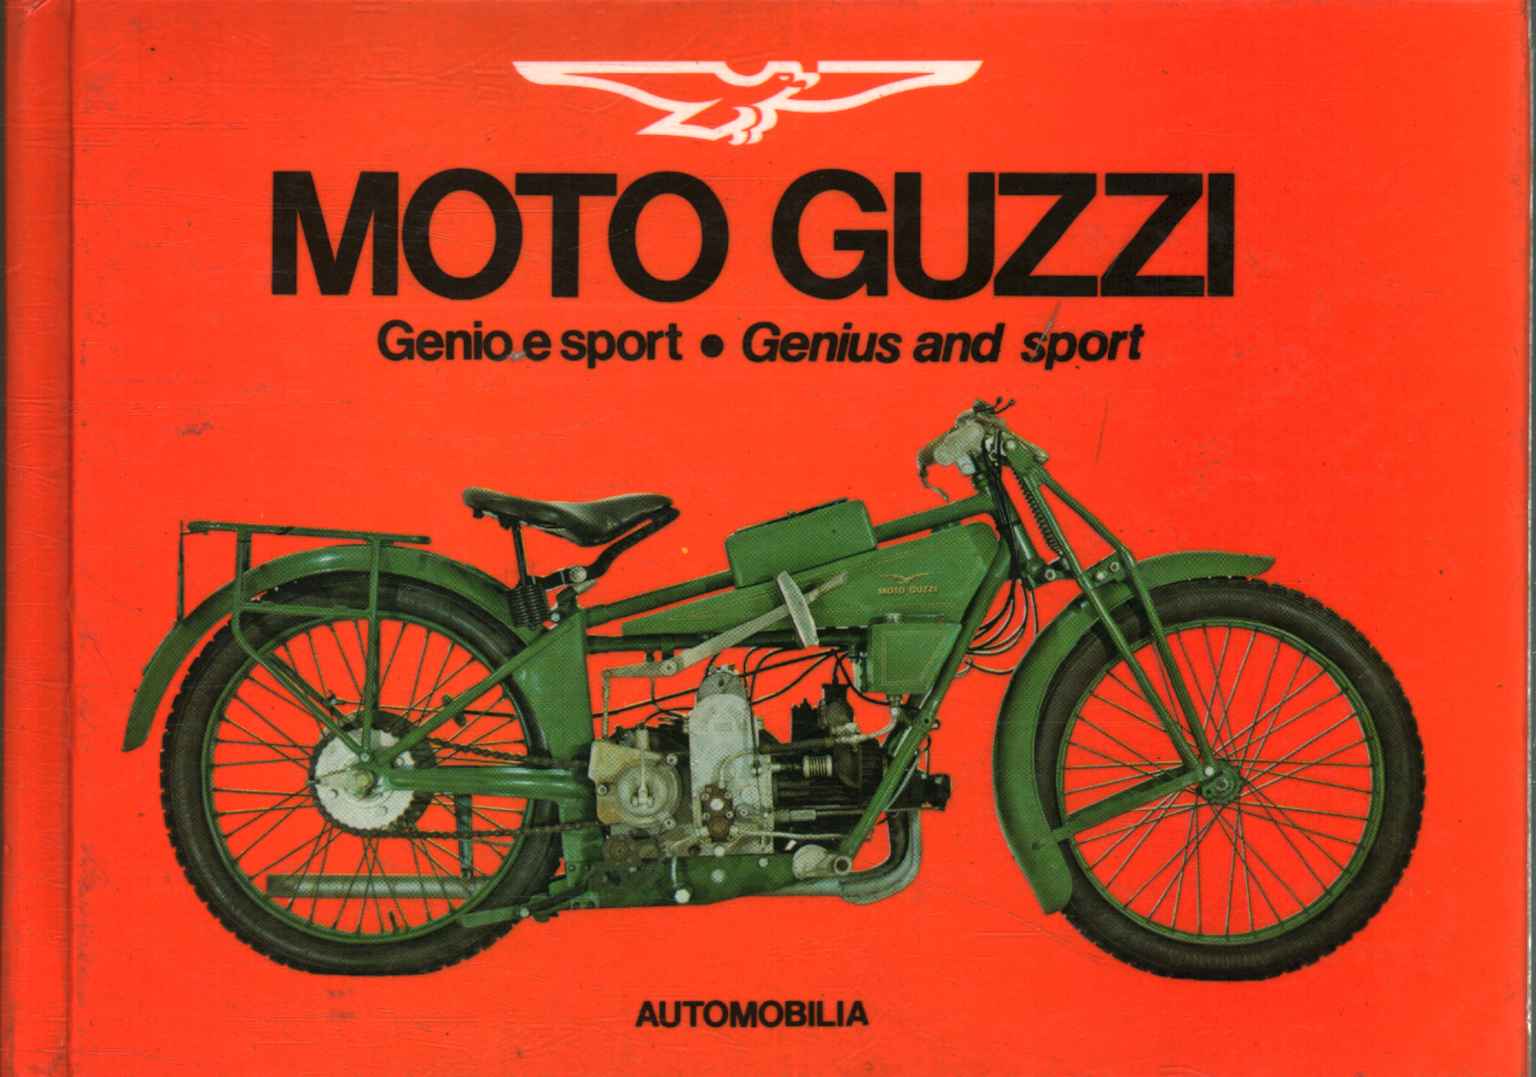 Guzzi motorcycles